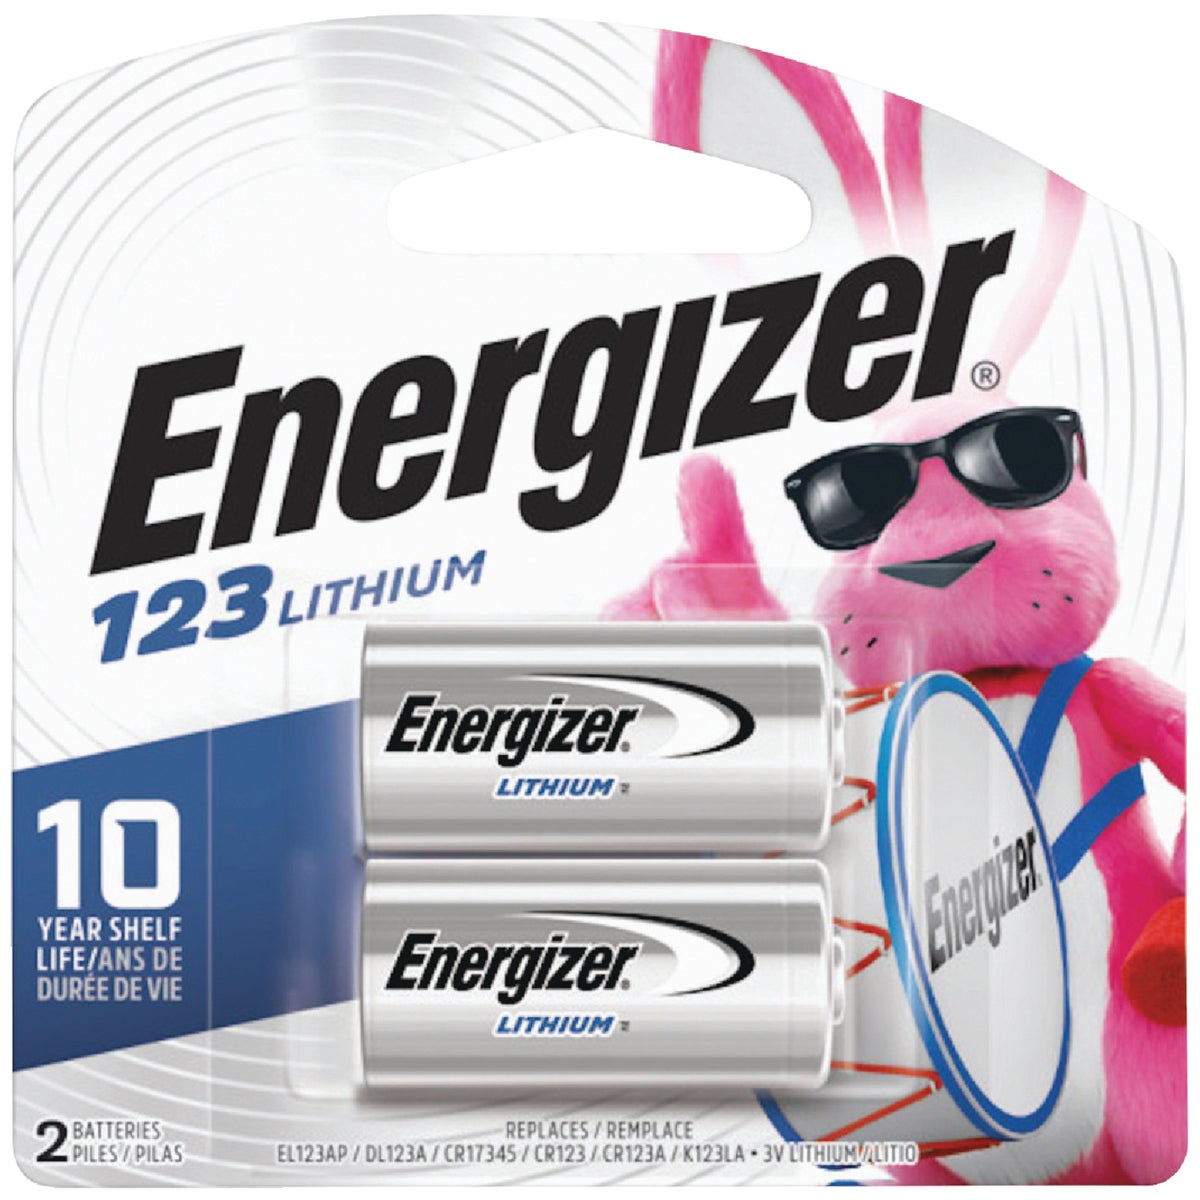 Energizer 123 Lithium 3V Photo Battery (2-Pack)